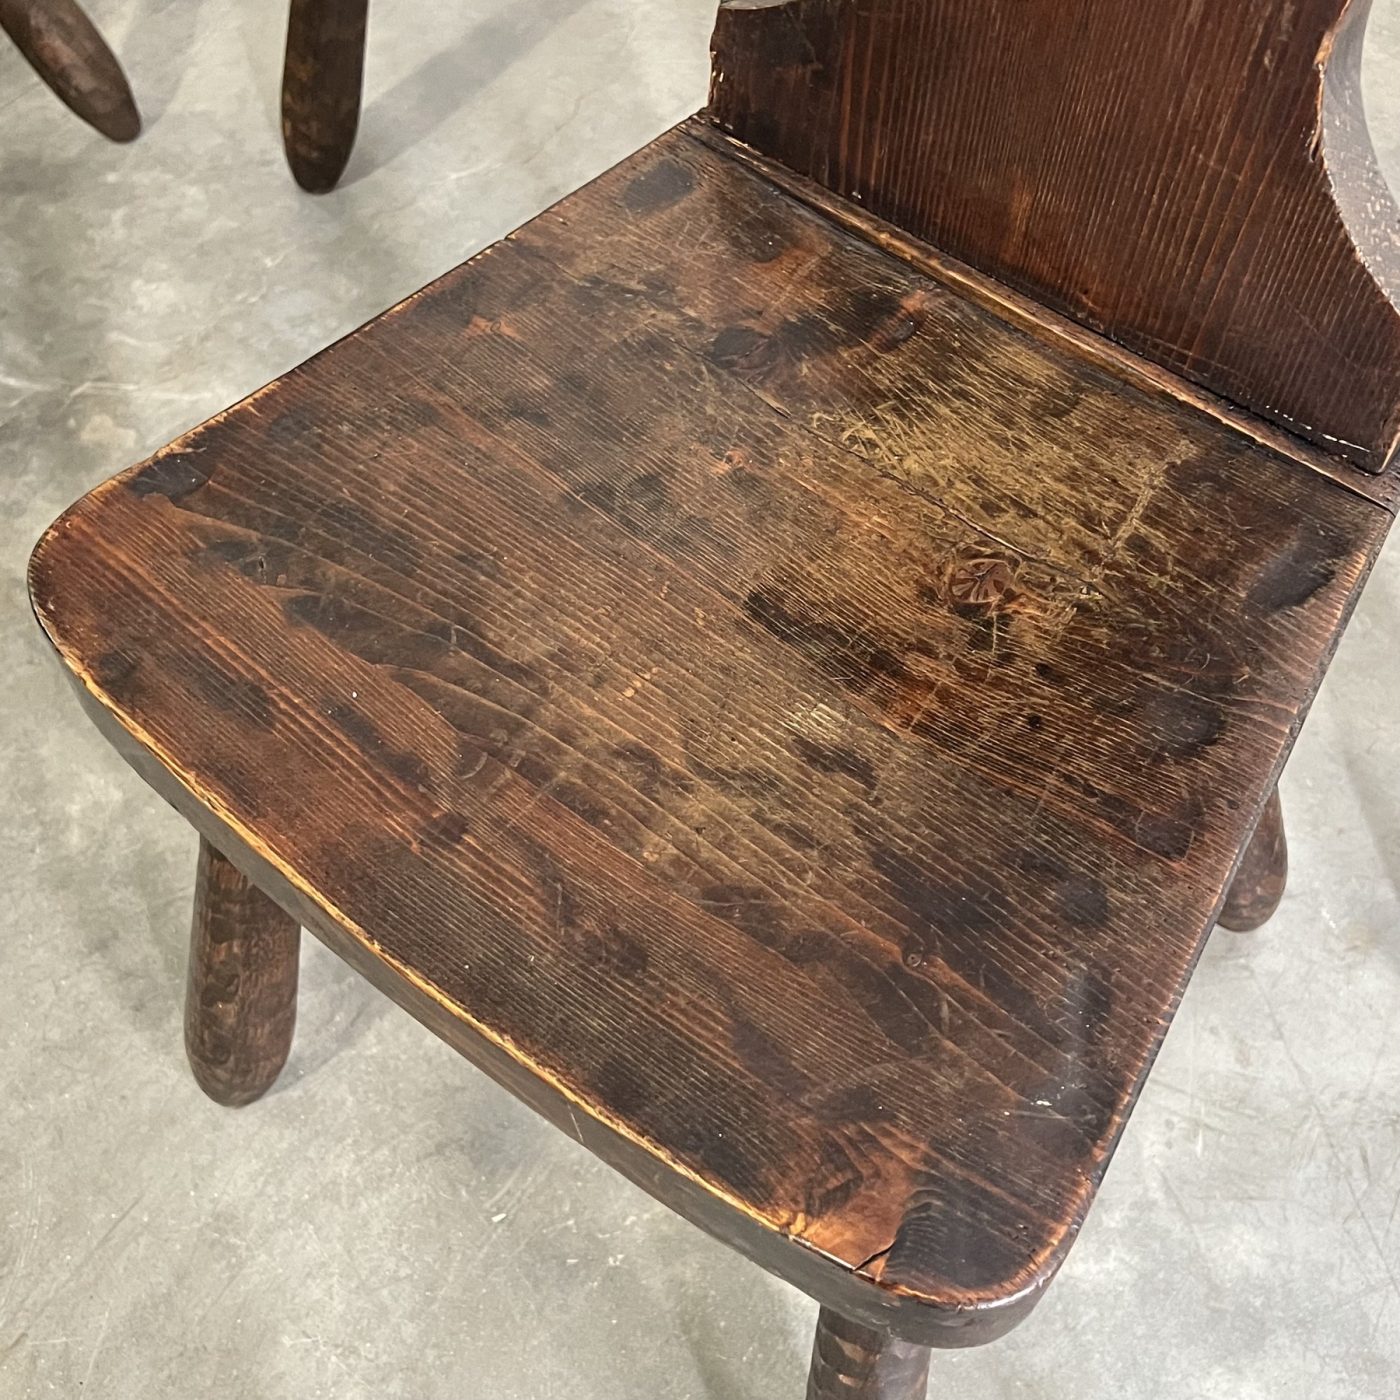 objet-vagabond-rustic-chairs0001